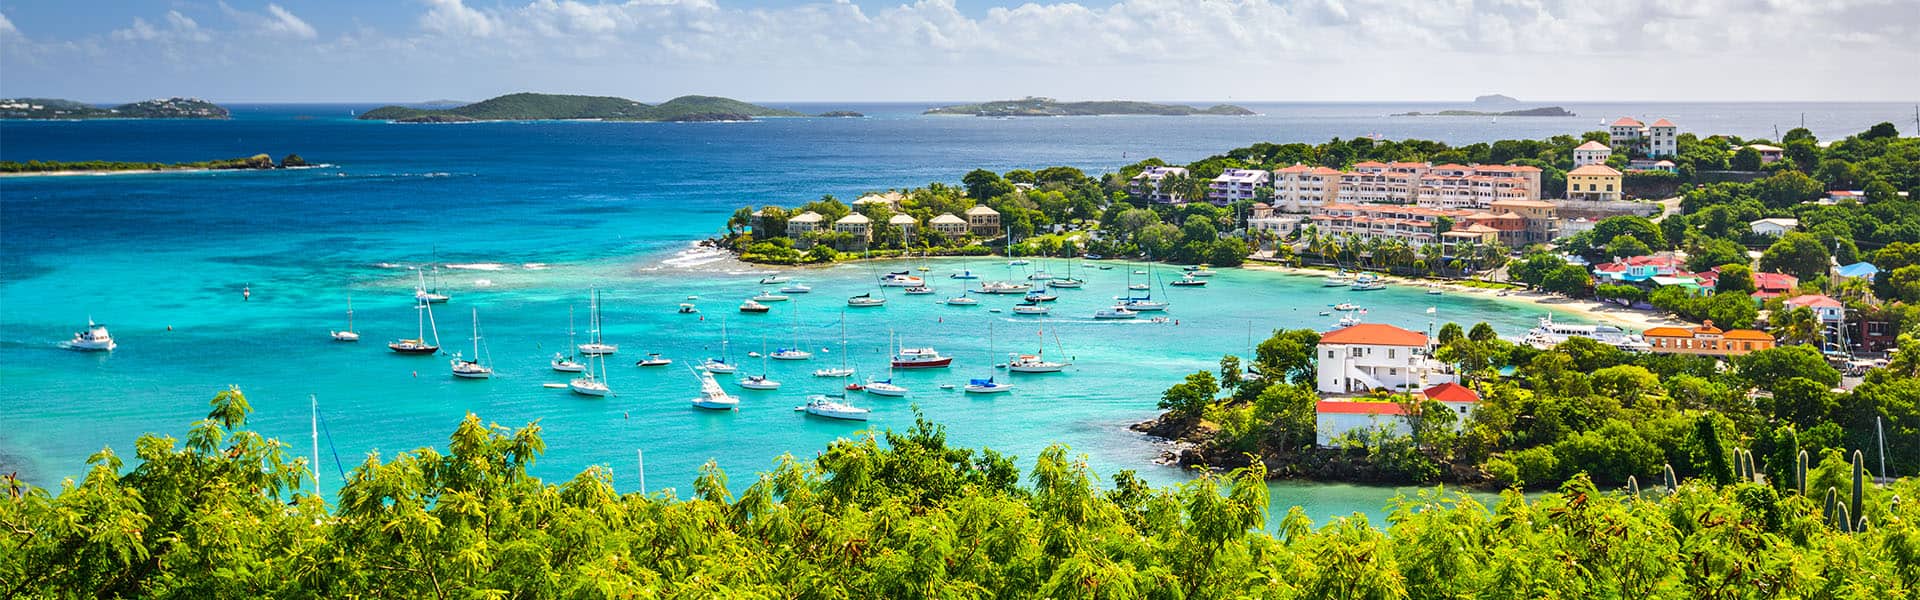 Caribbean: Great Stirrup Cay & Dominican Republic